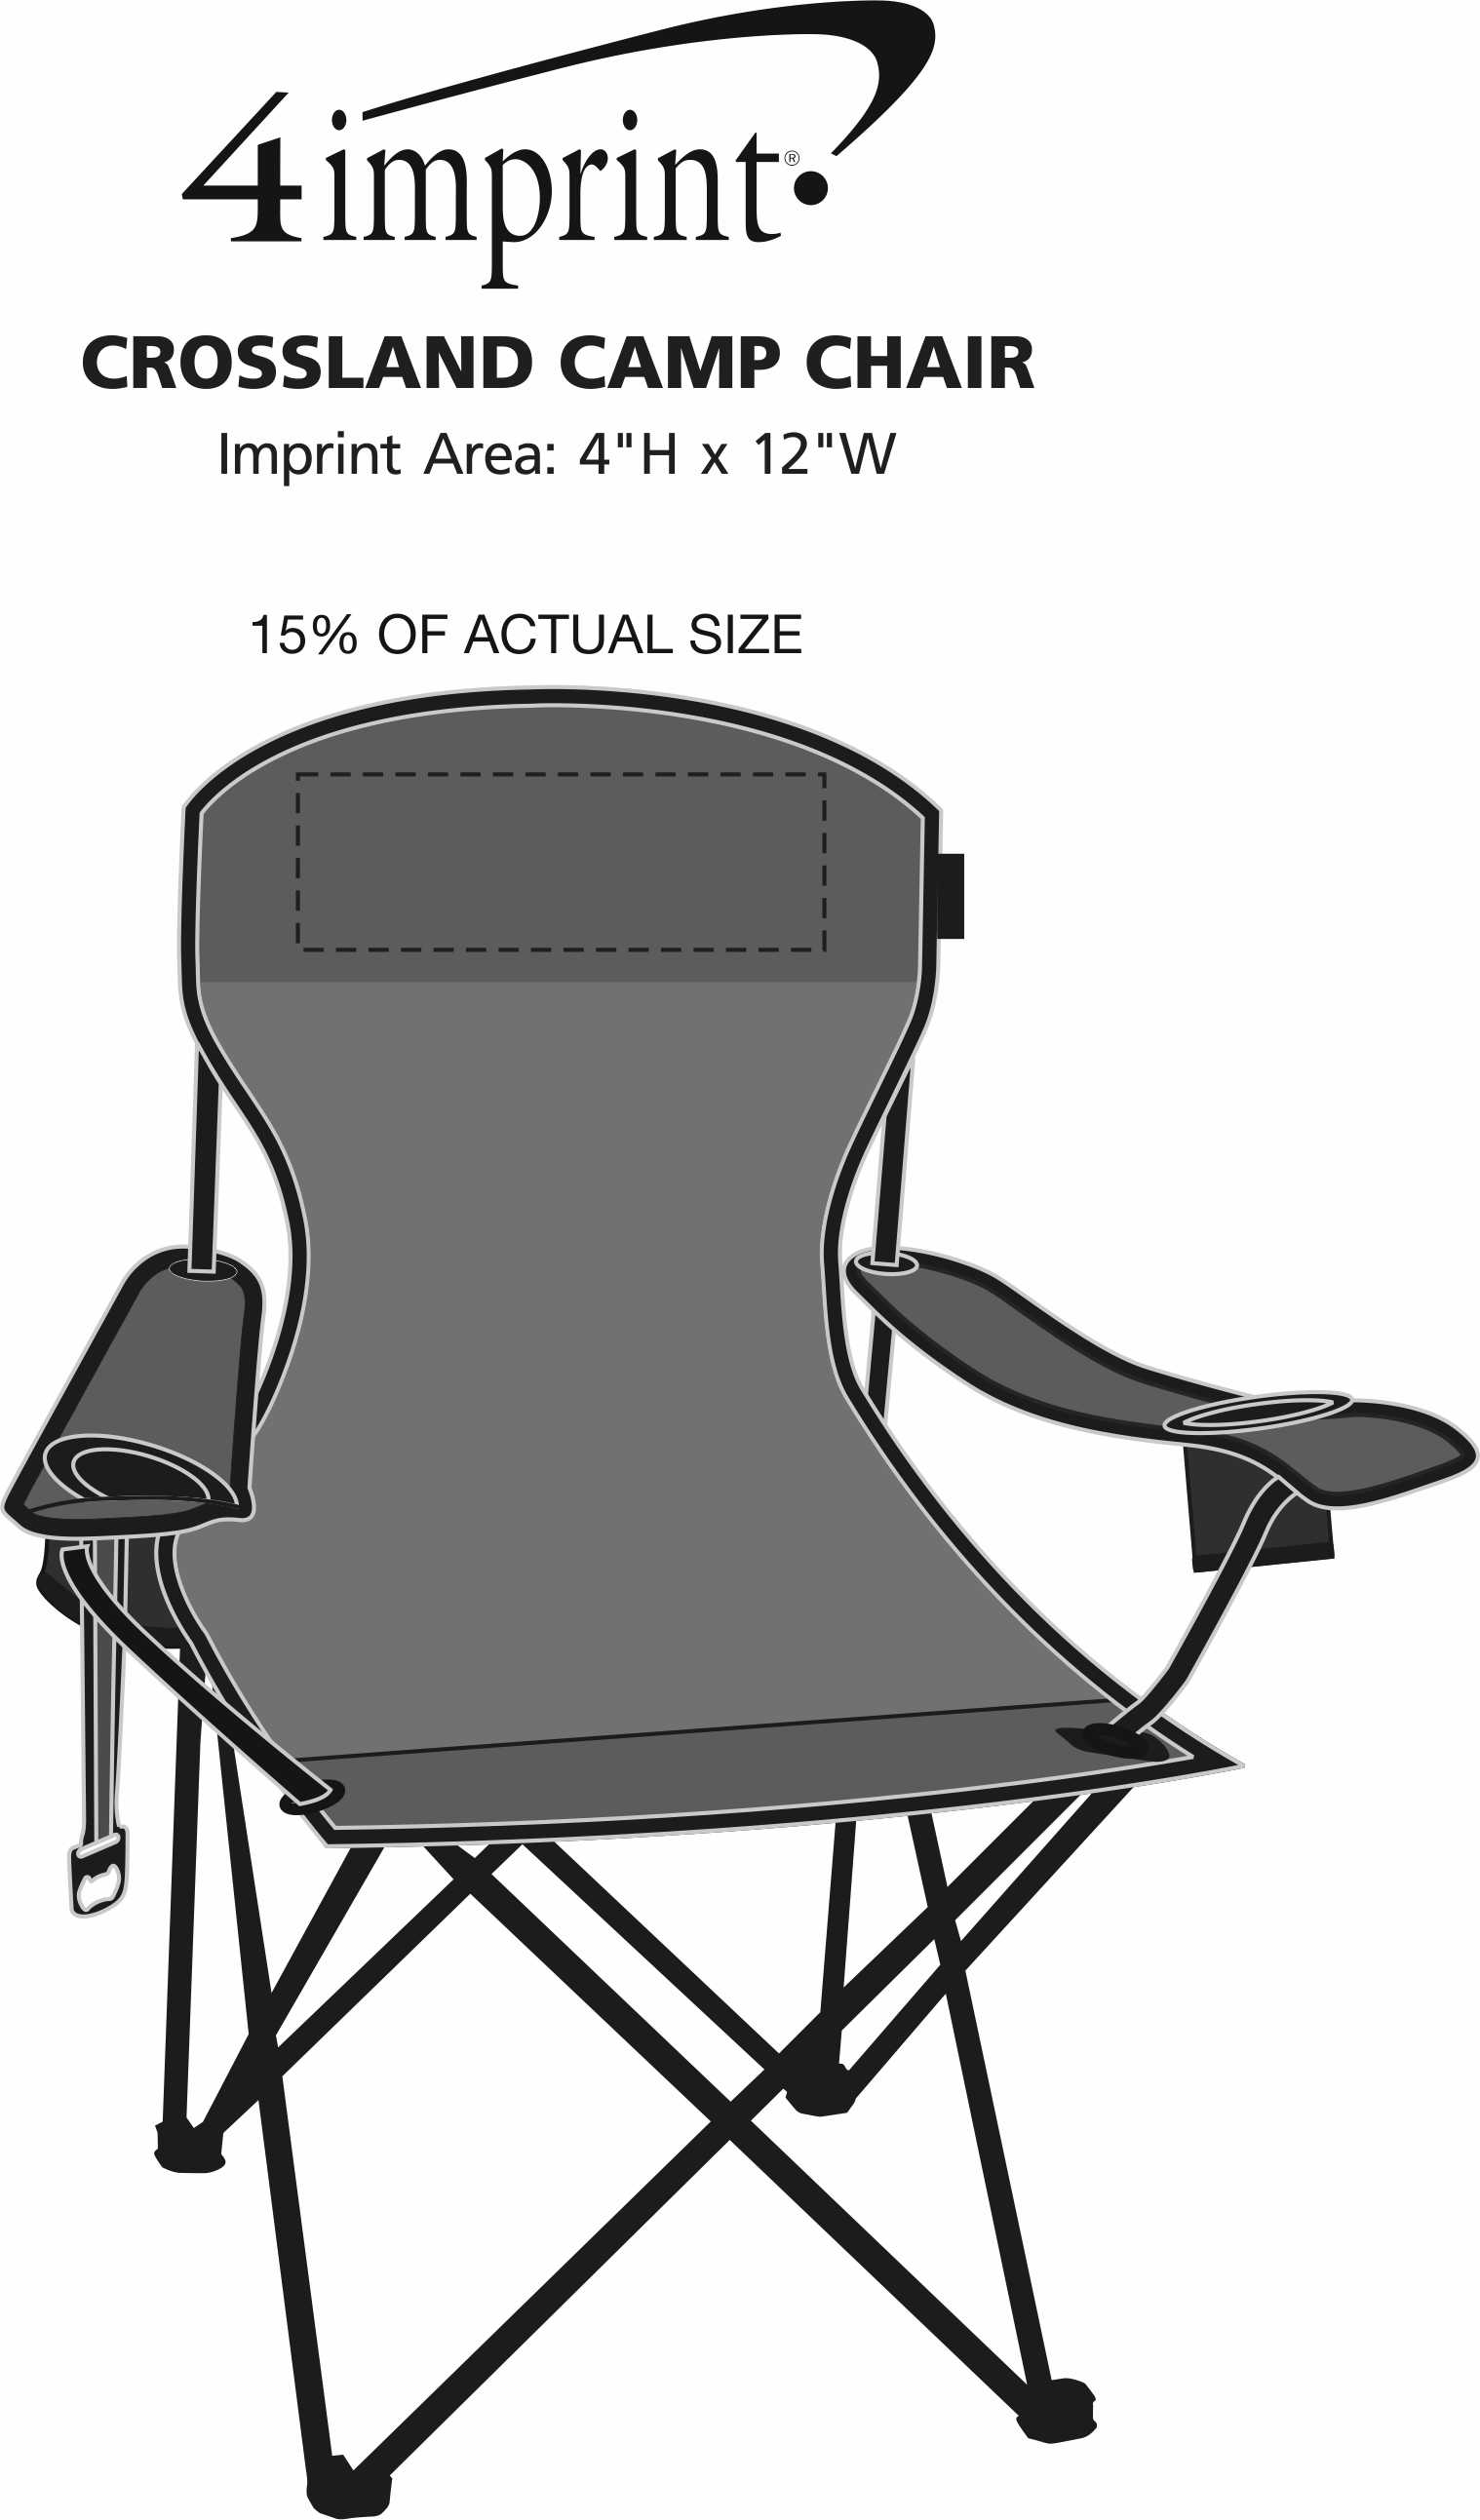 Imprint Area of Crossland Camp Chair